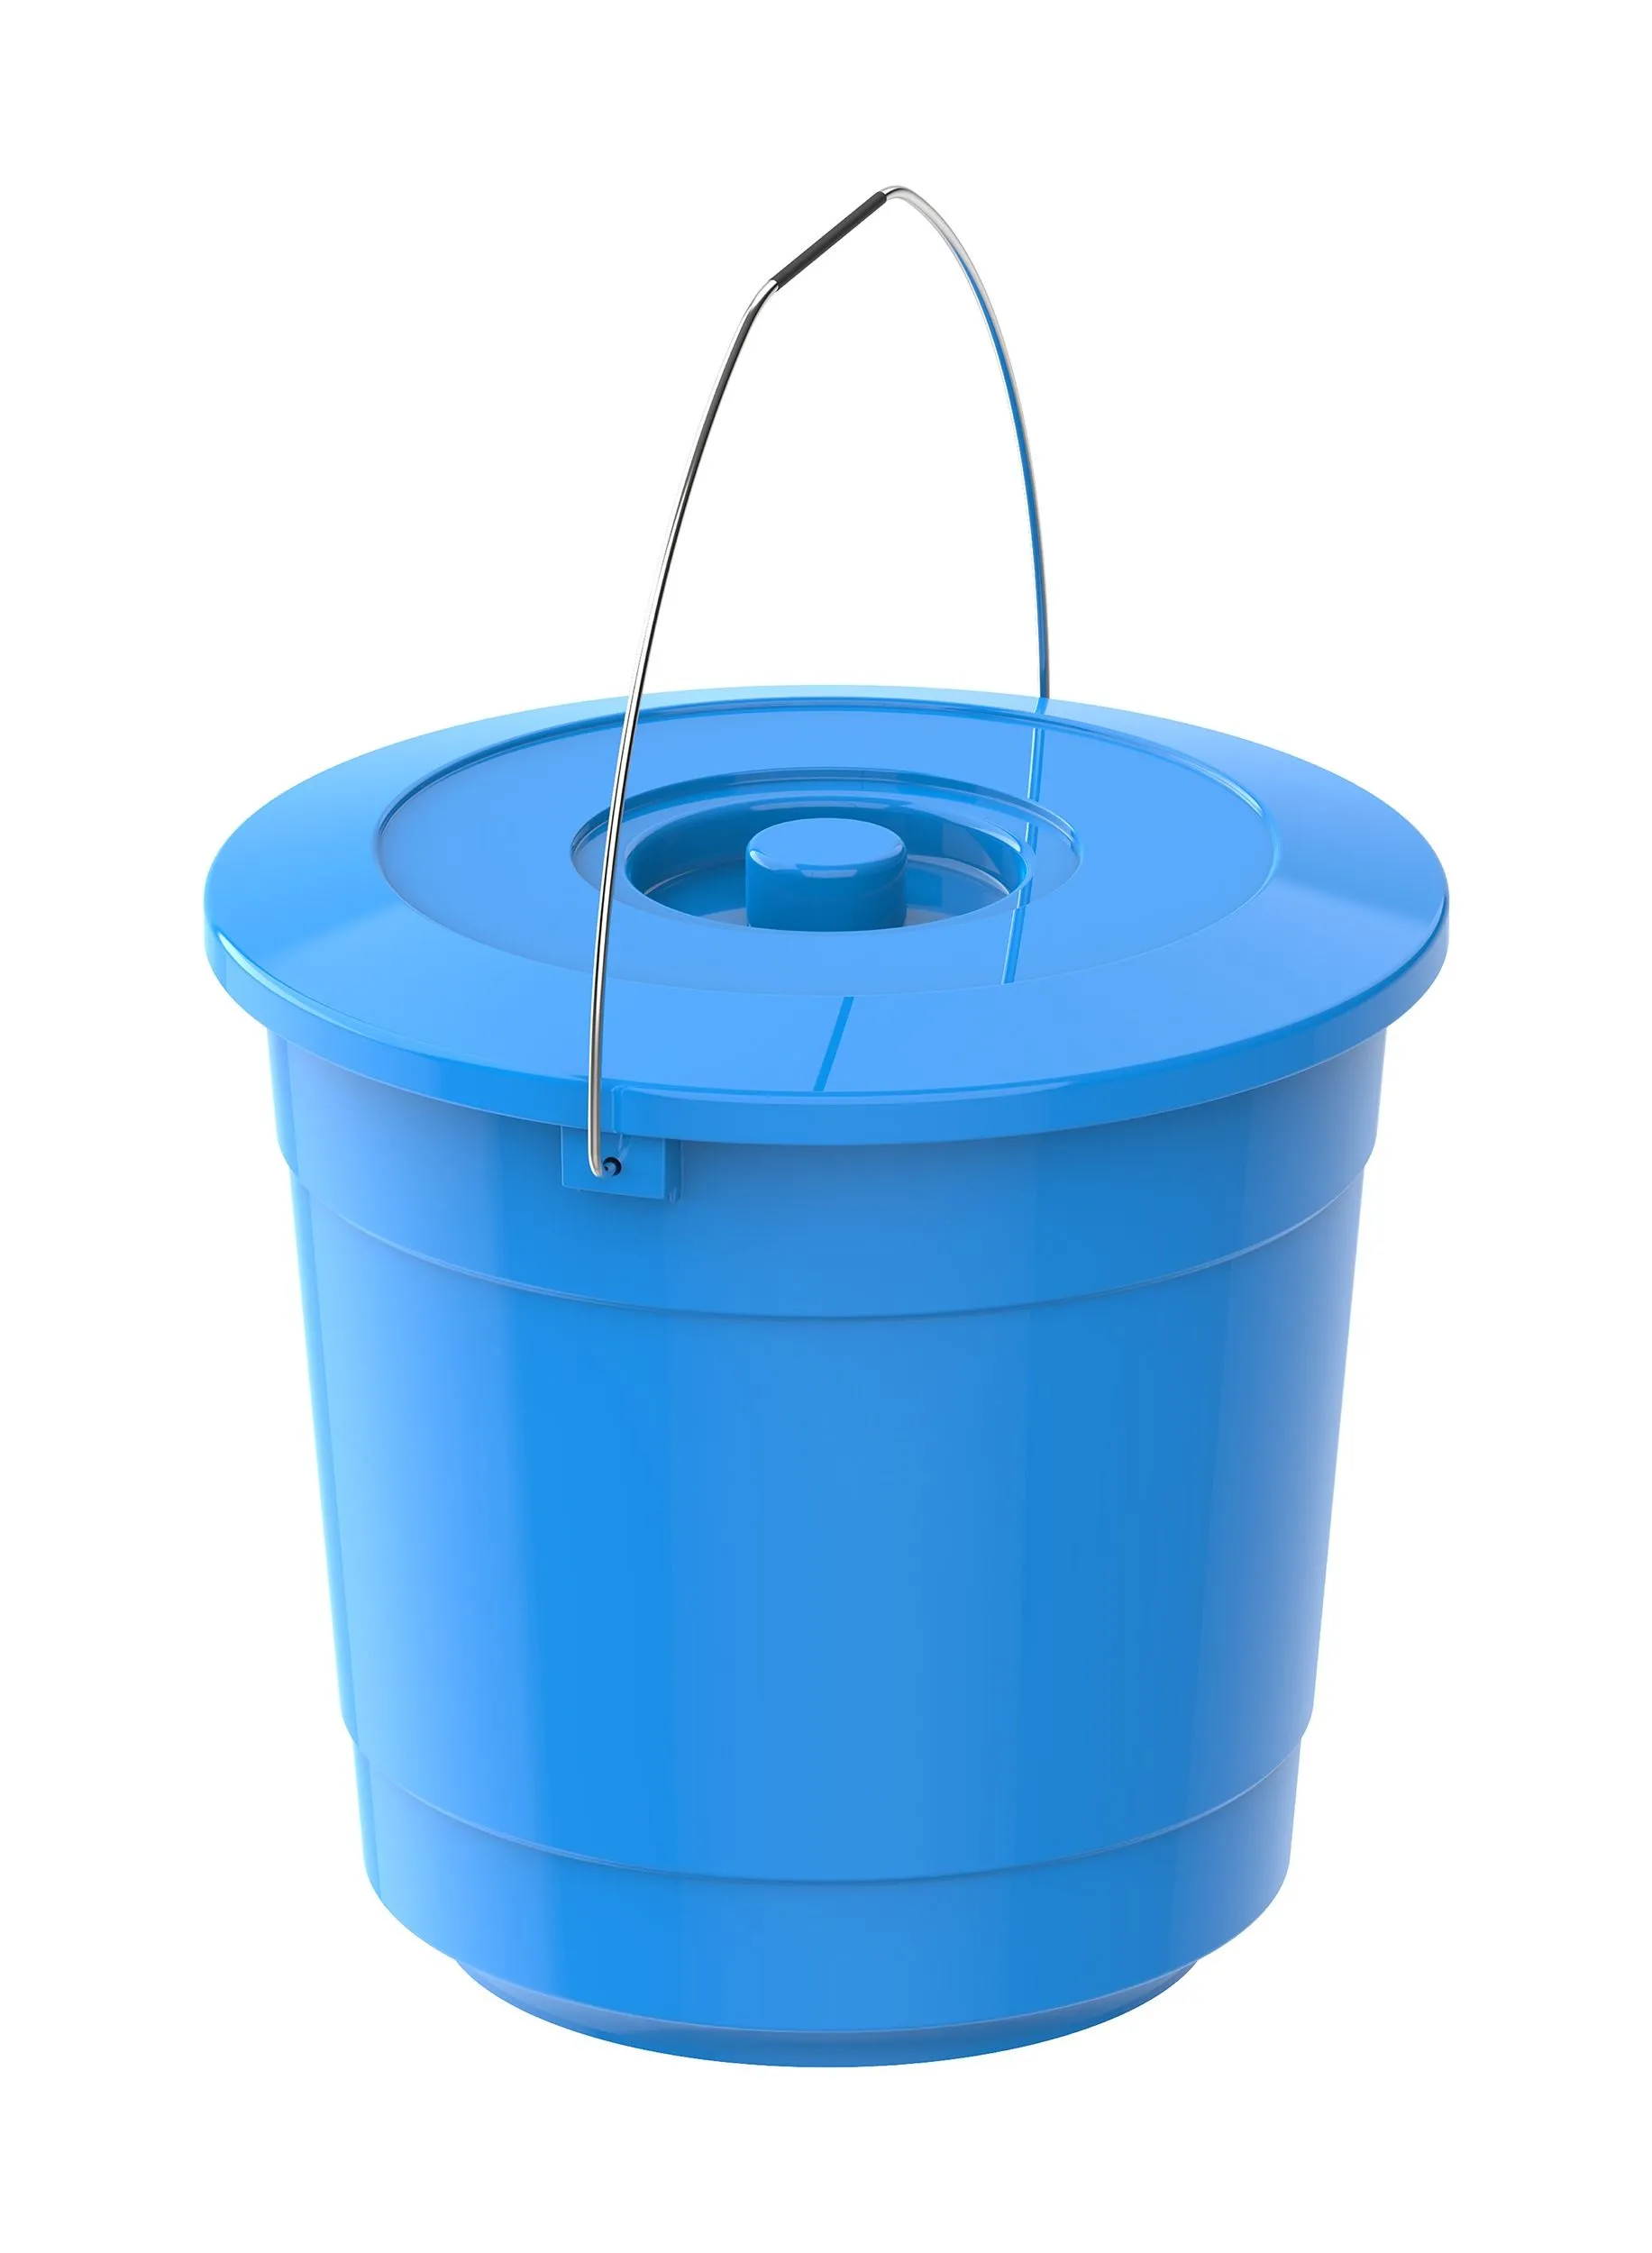 Cosmoplast EX 3L Round Plastic Bucket with Steel Handle